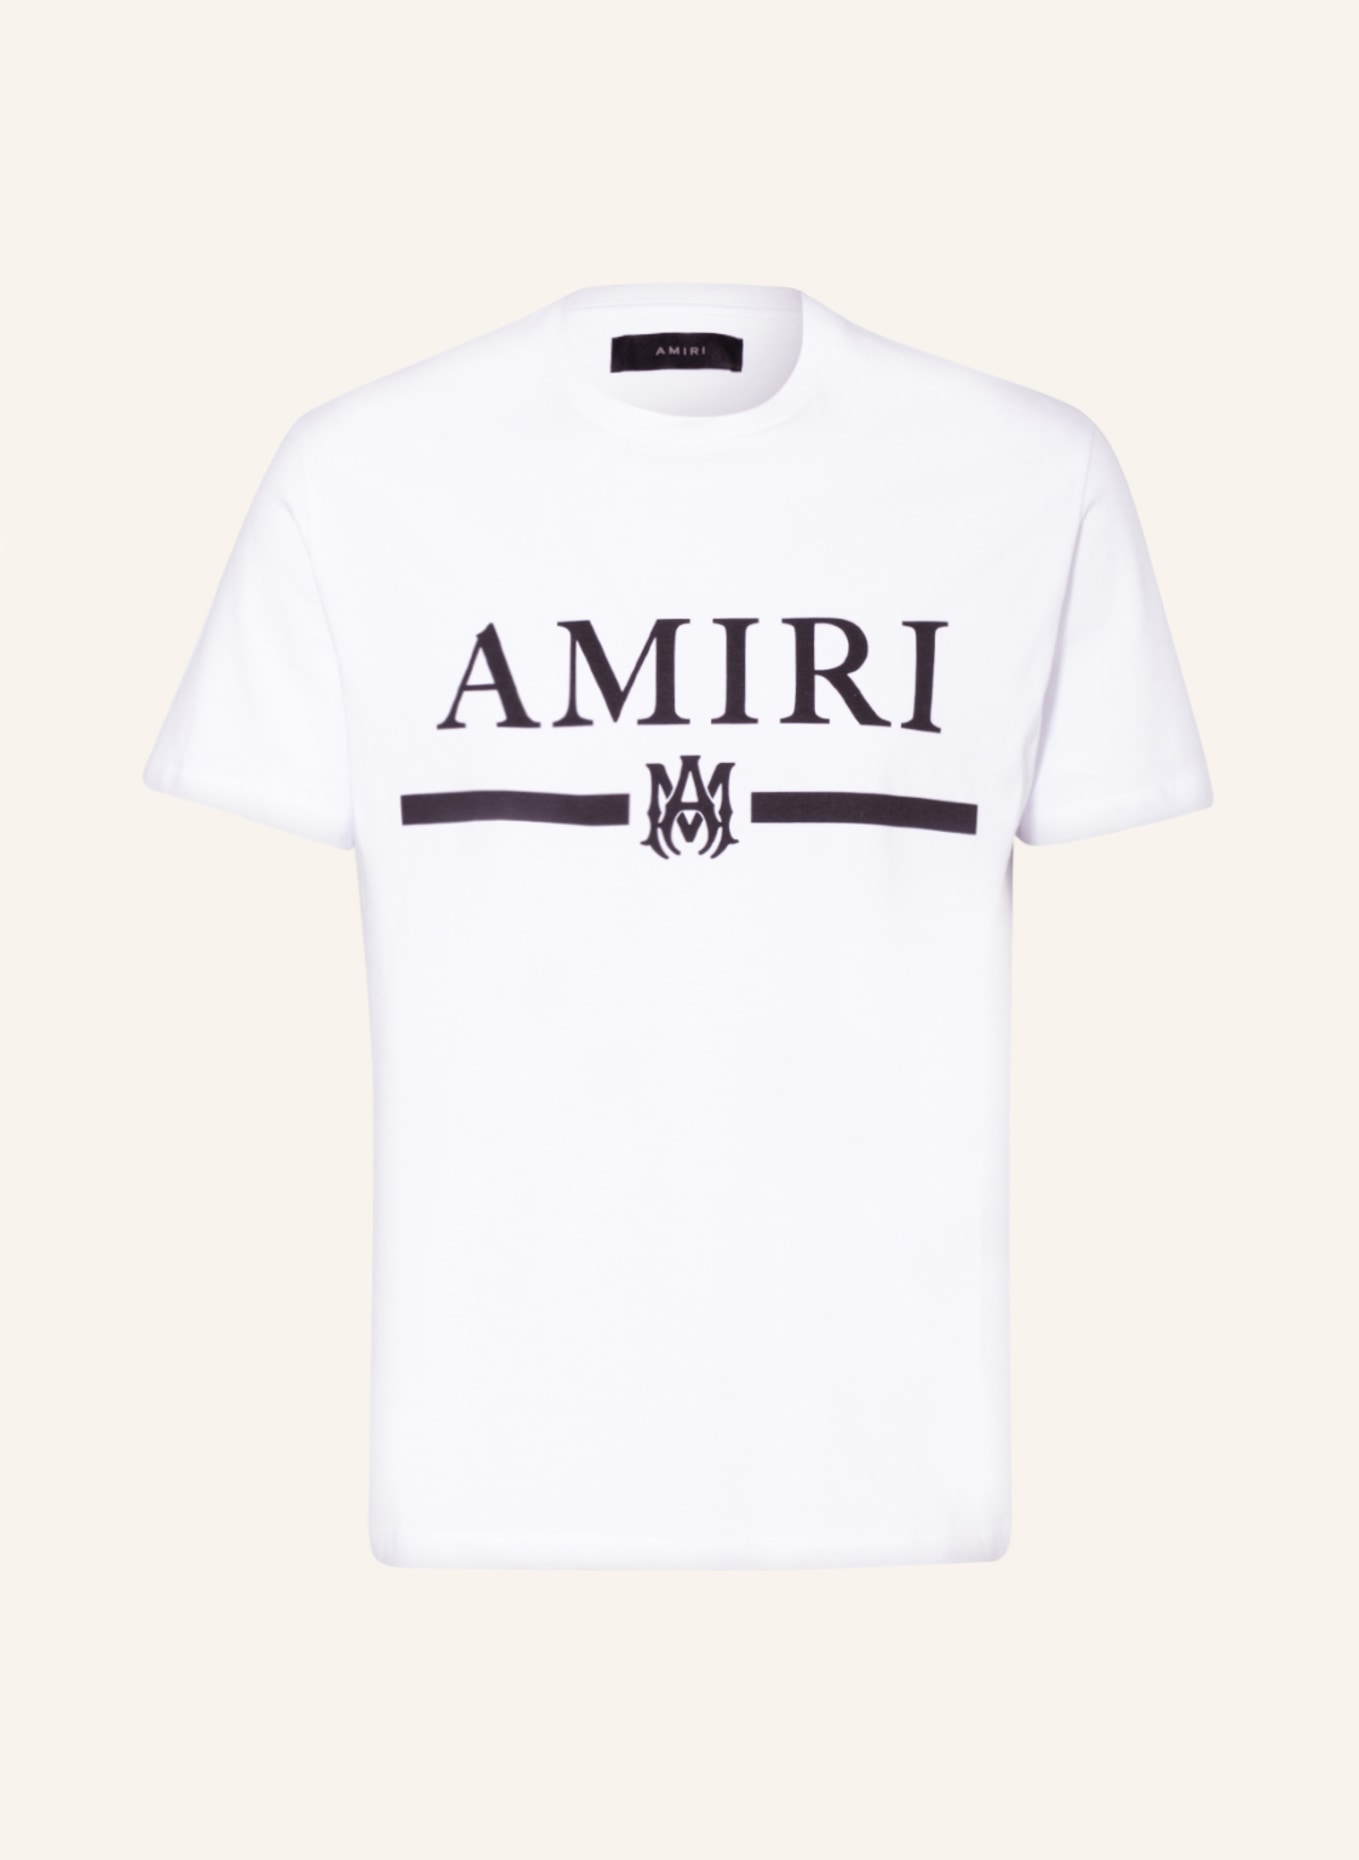 AMIRI T-shirt in white | Breuninger